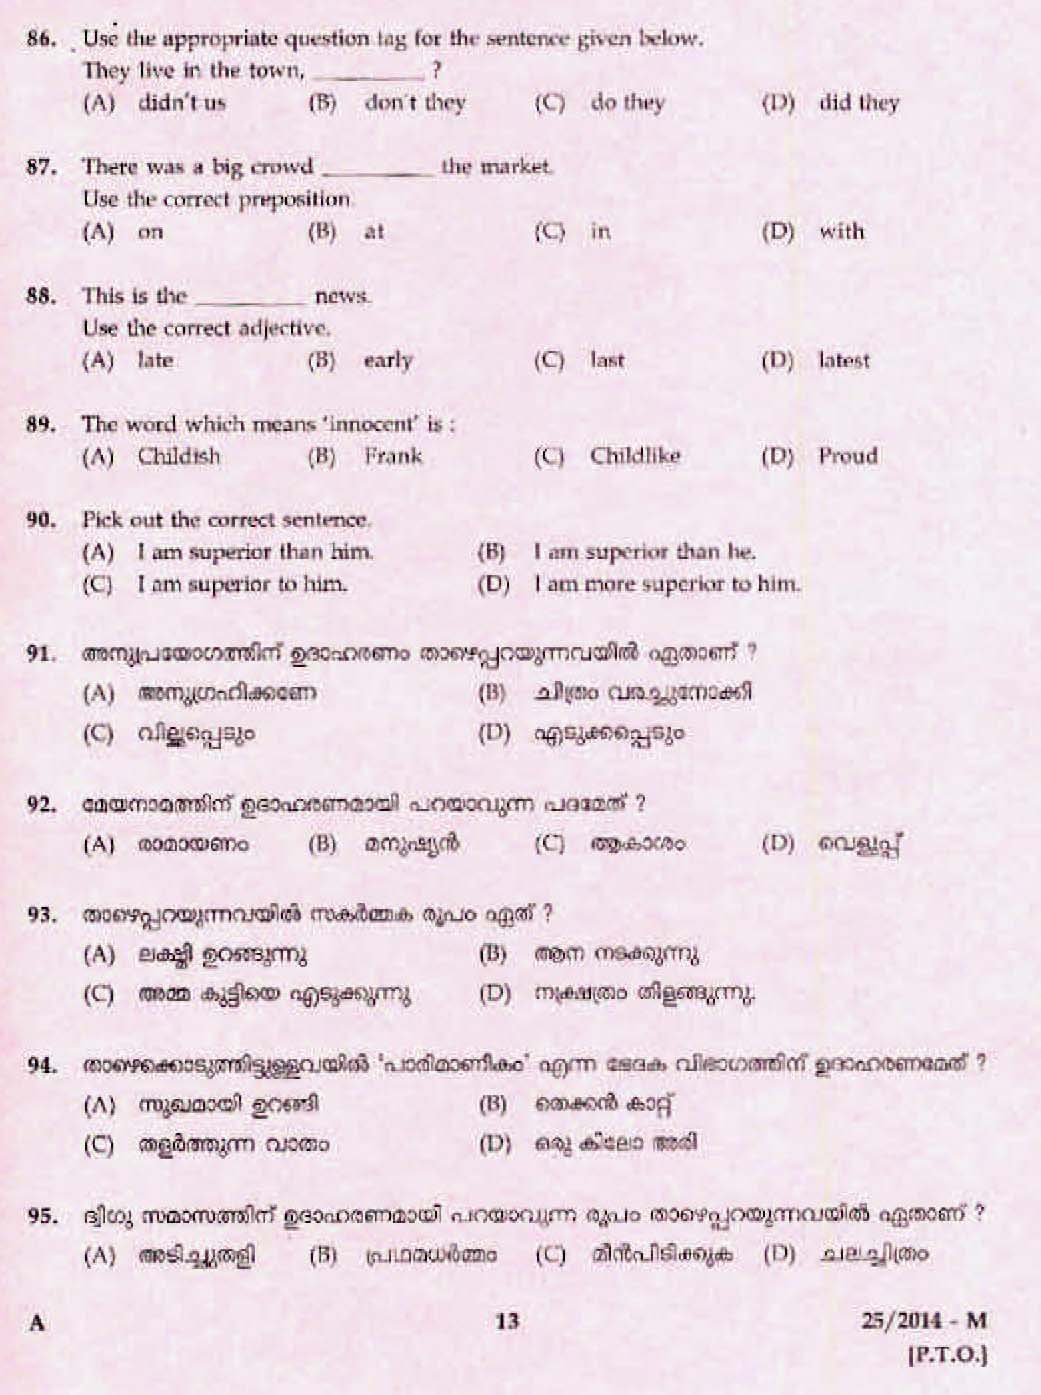 LD Clerk Idukki Question Paper Malayalam 2014 Paper Code 252014 M 9